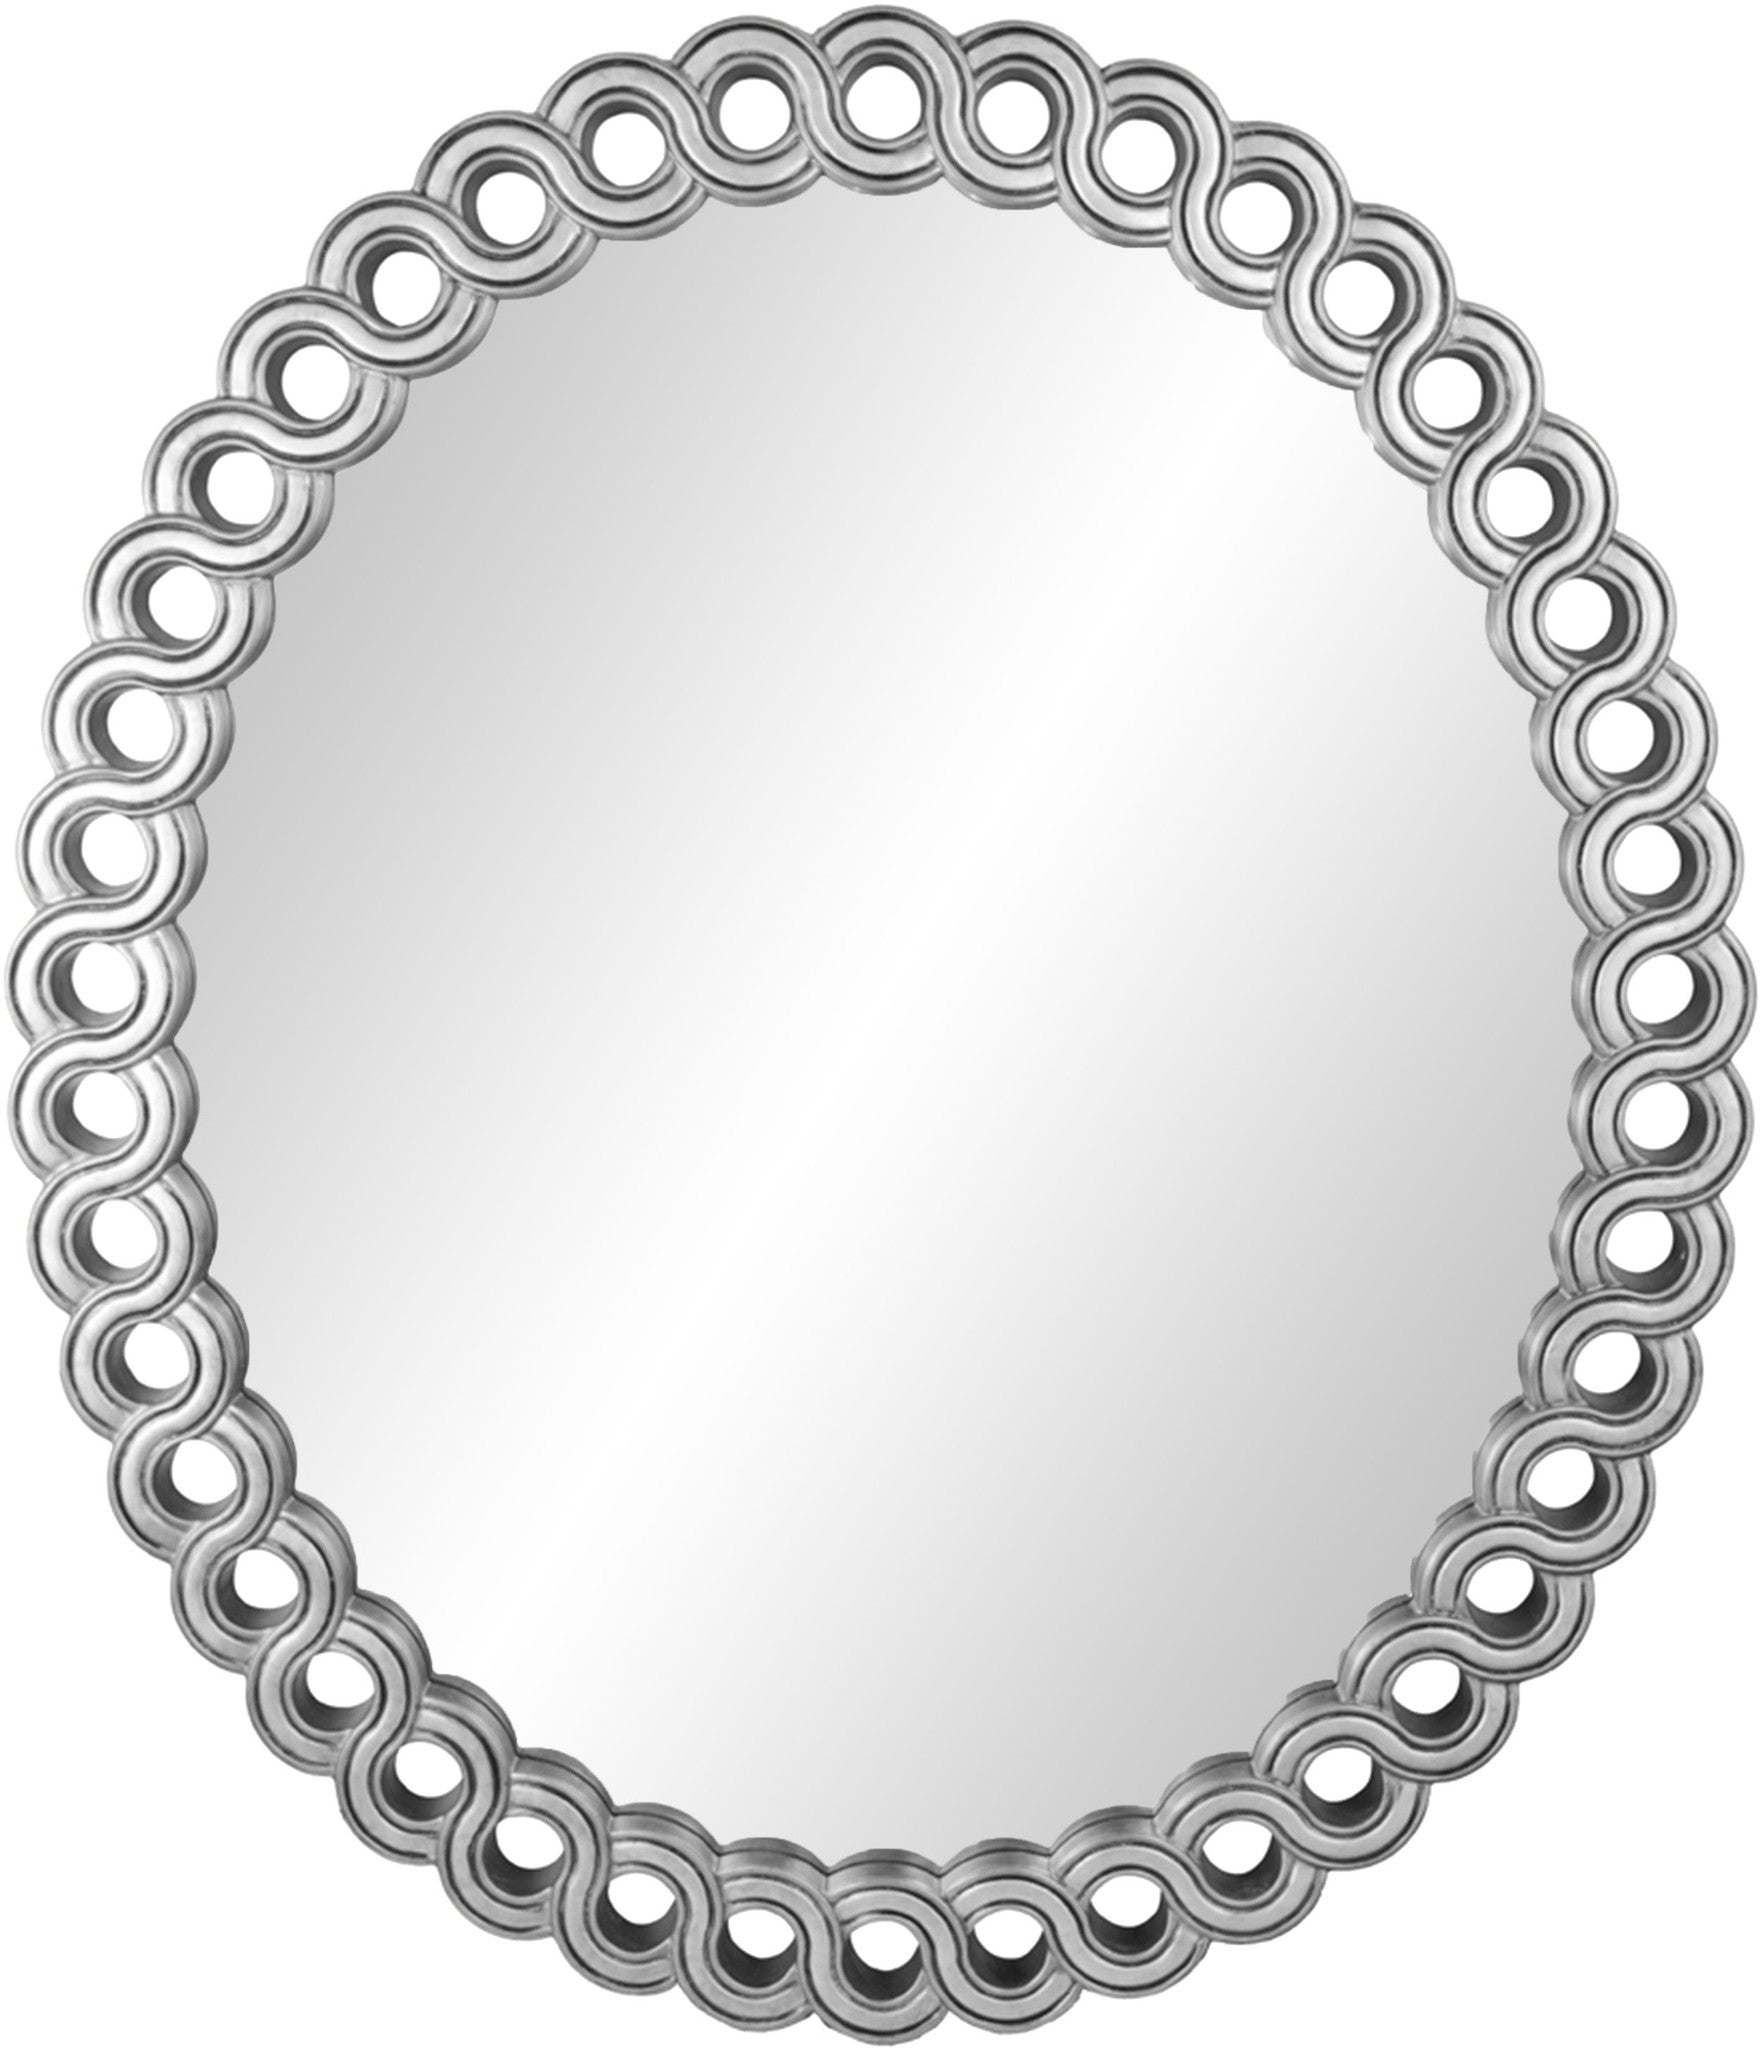 Chain mirror